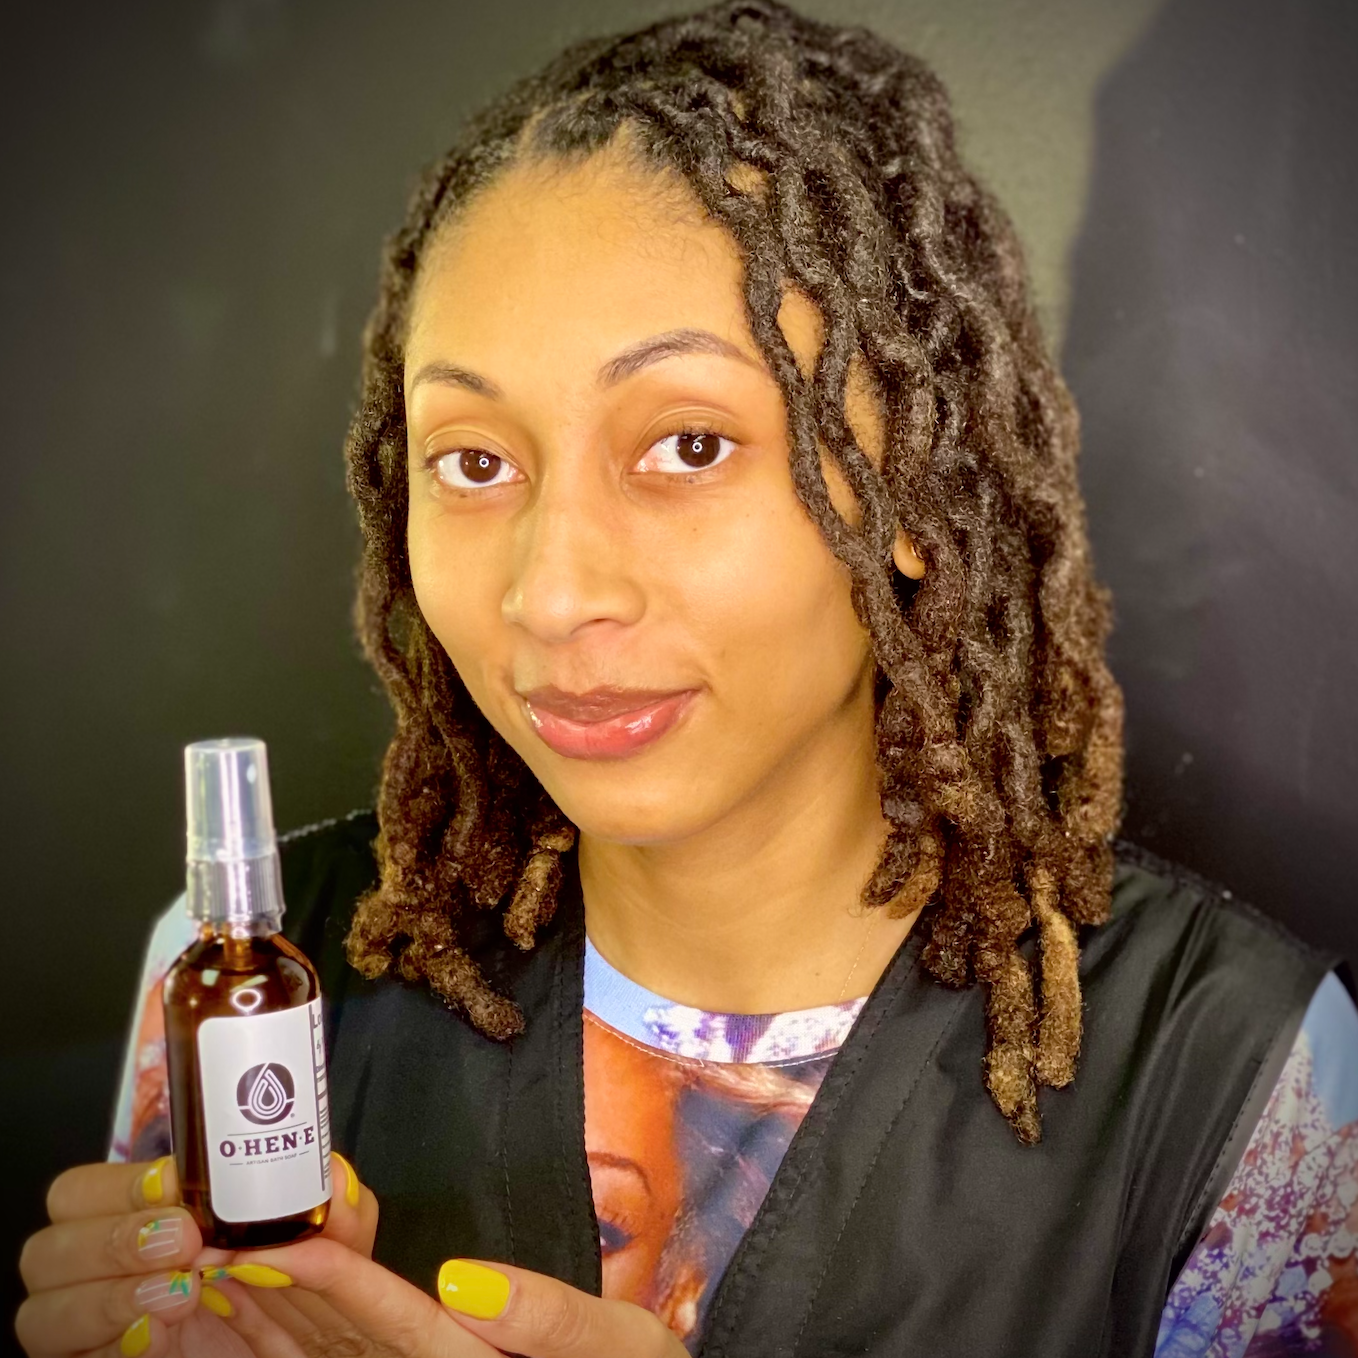 Maya Marchelle poses with OHENE Loc Libation Hair moisturizing oil